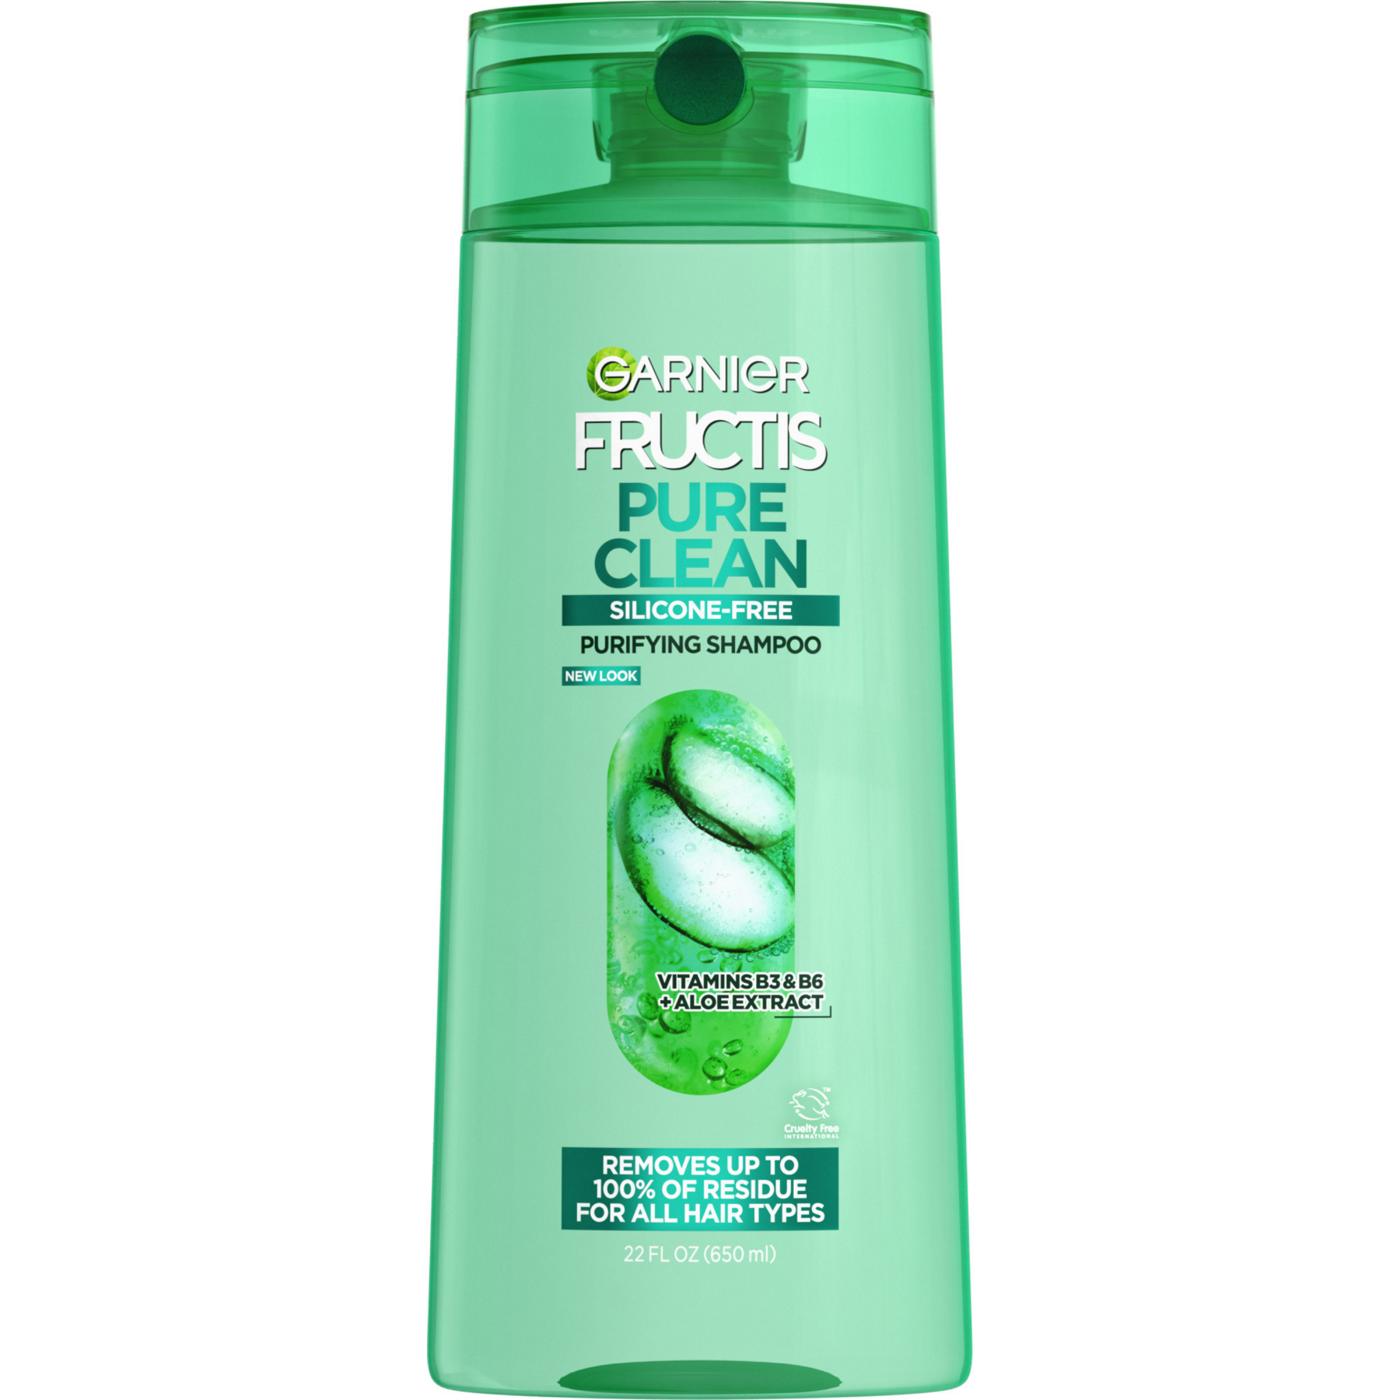 Garnier Fructis Pure Clean Purifying Shampoo; image 1 of 8